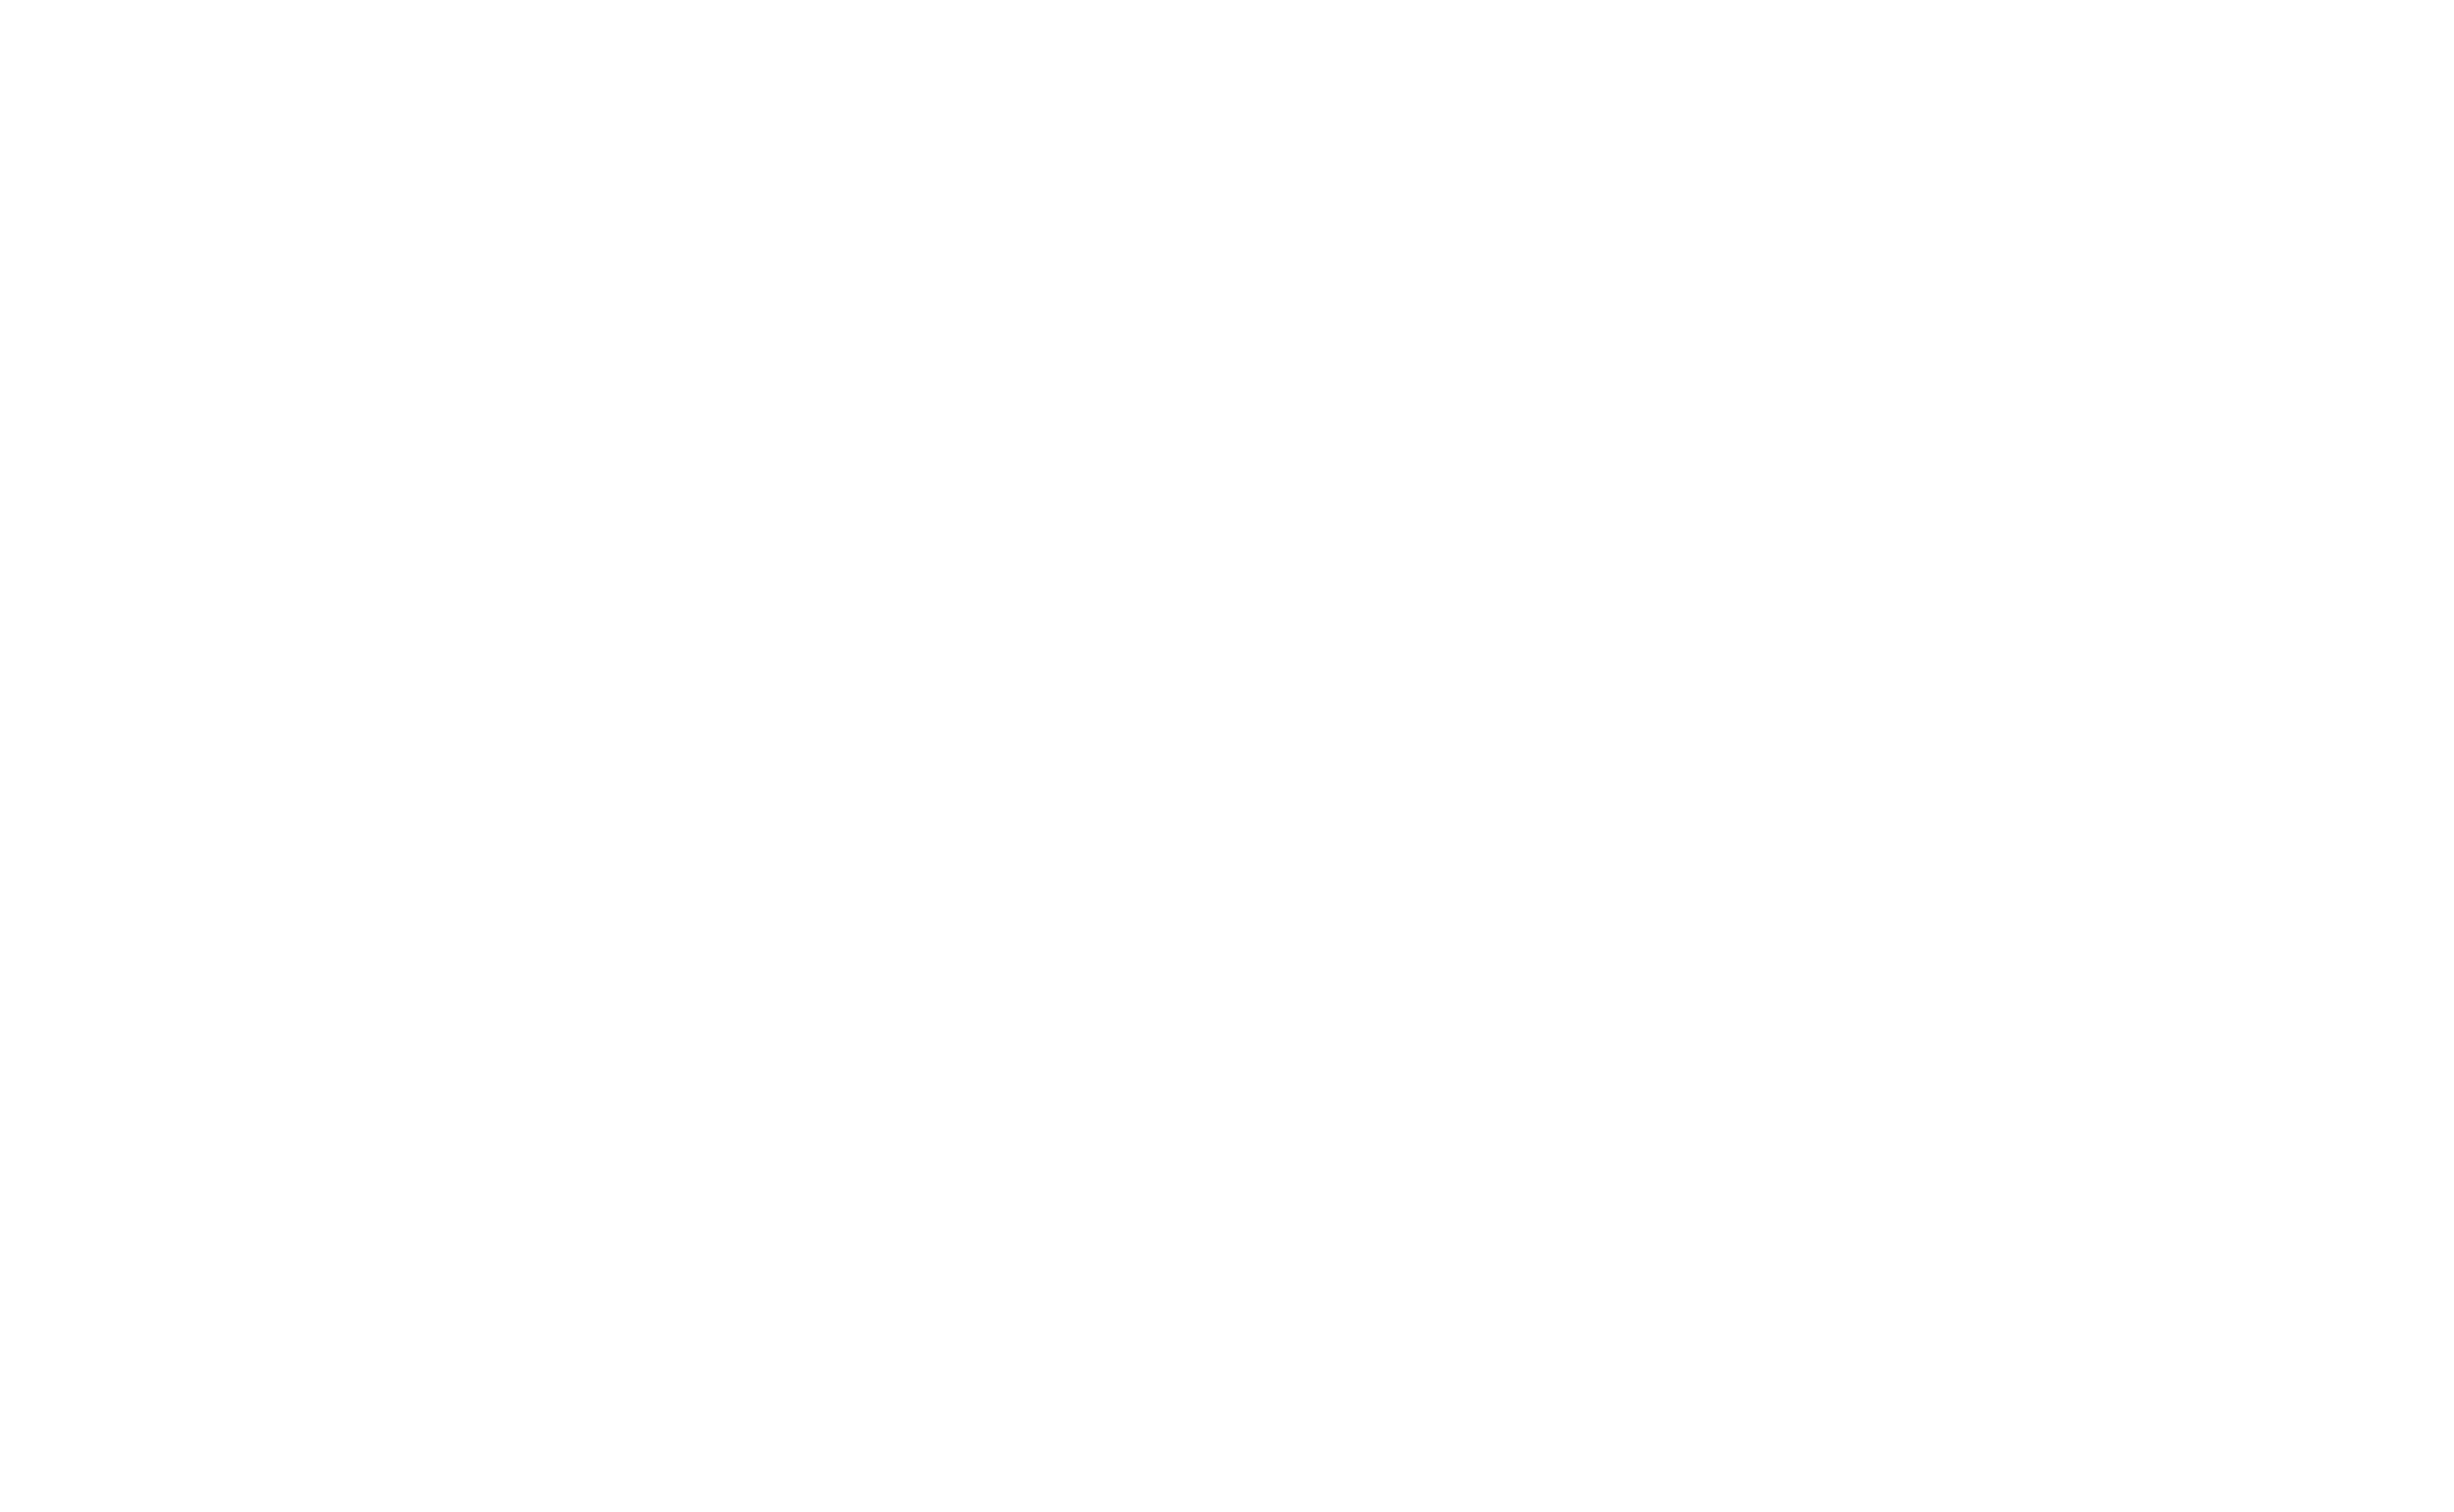 FRZ_Bildmarke+FRZ_Logo_Weiss.png (0.2 MB)